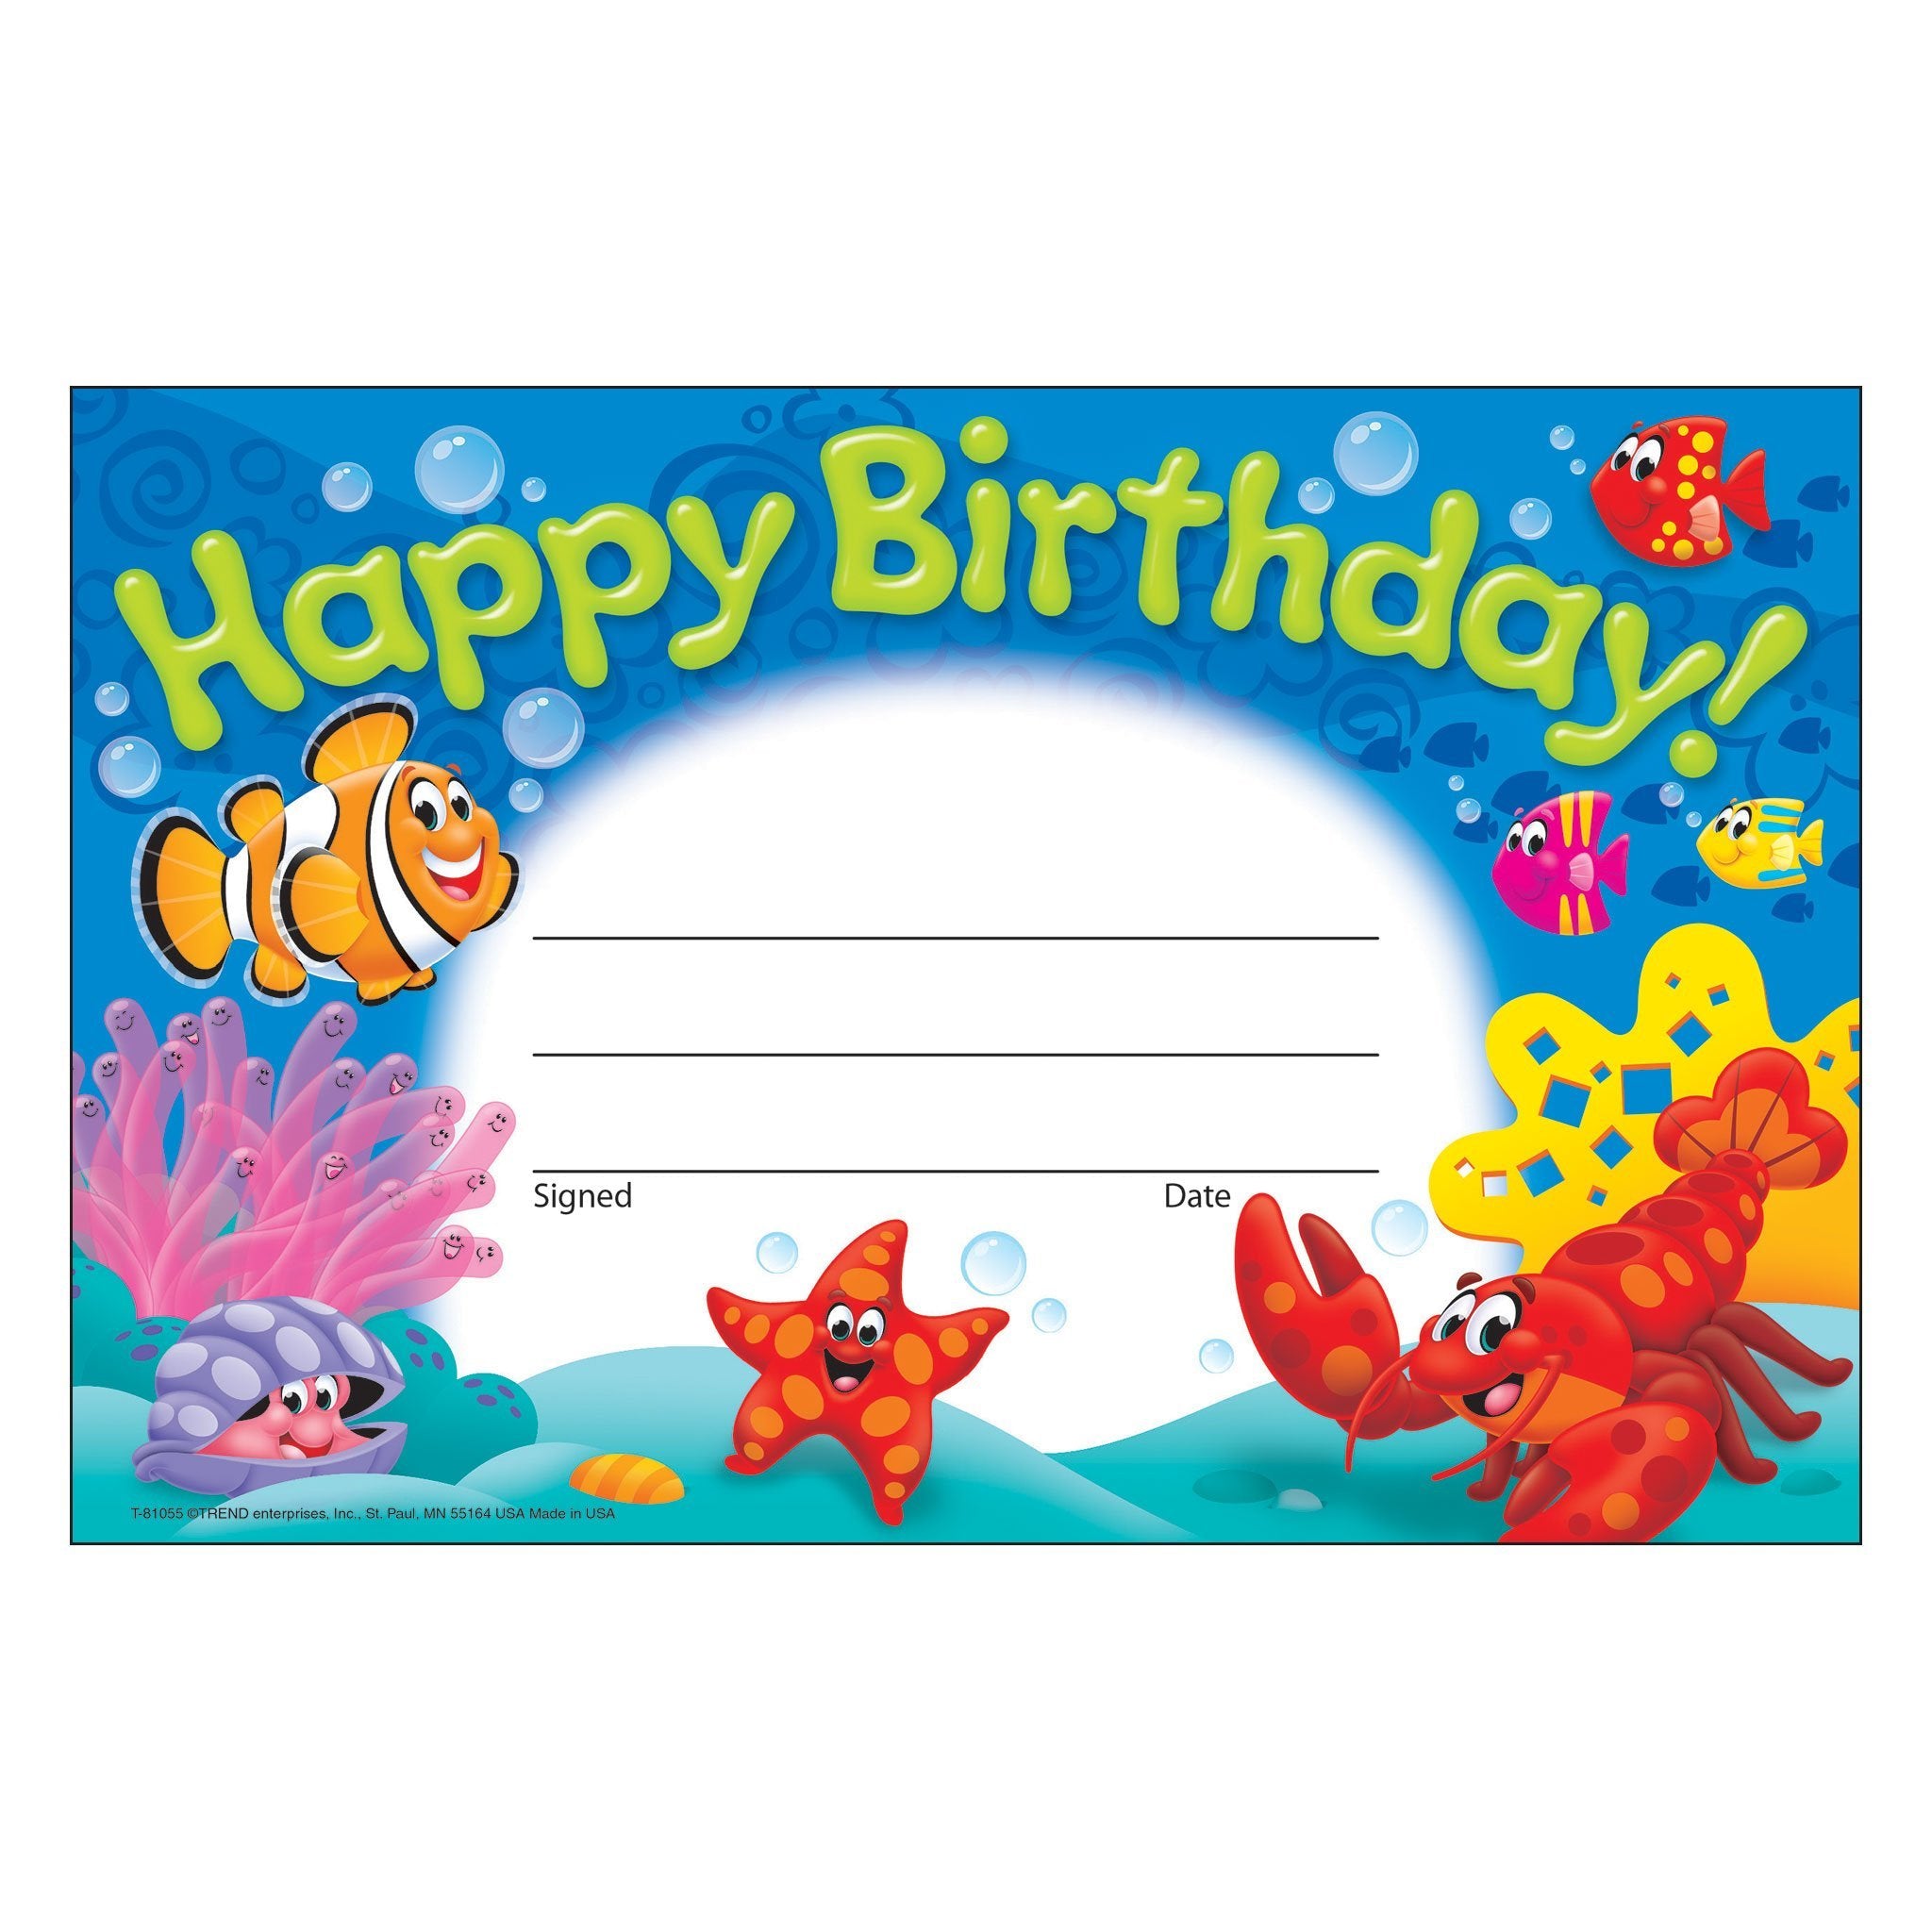 Happy Birthday! Sea Buddies™ Rewards & Incentives